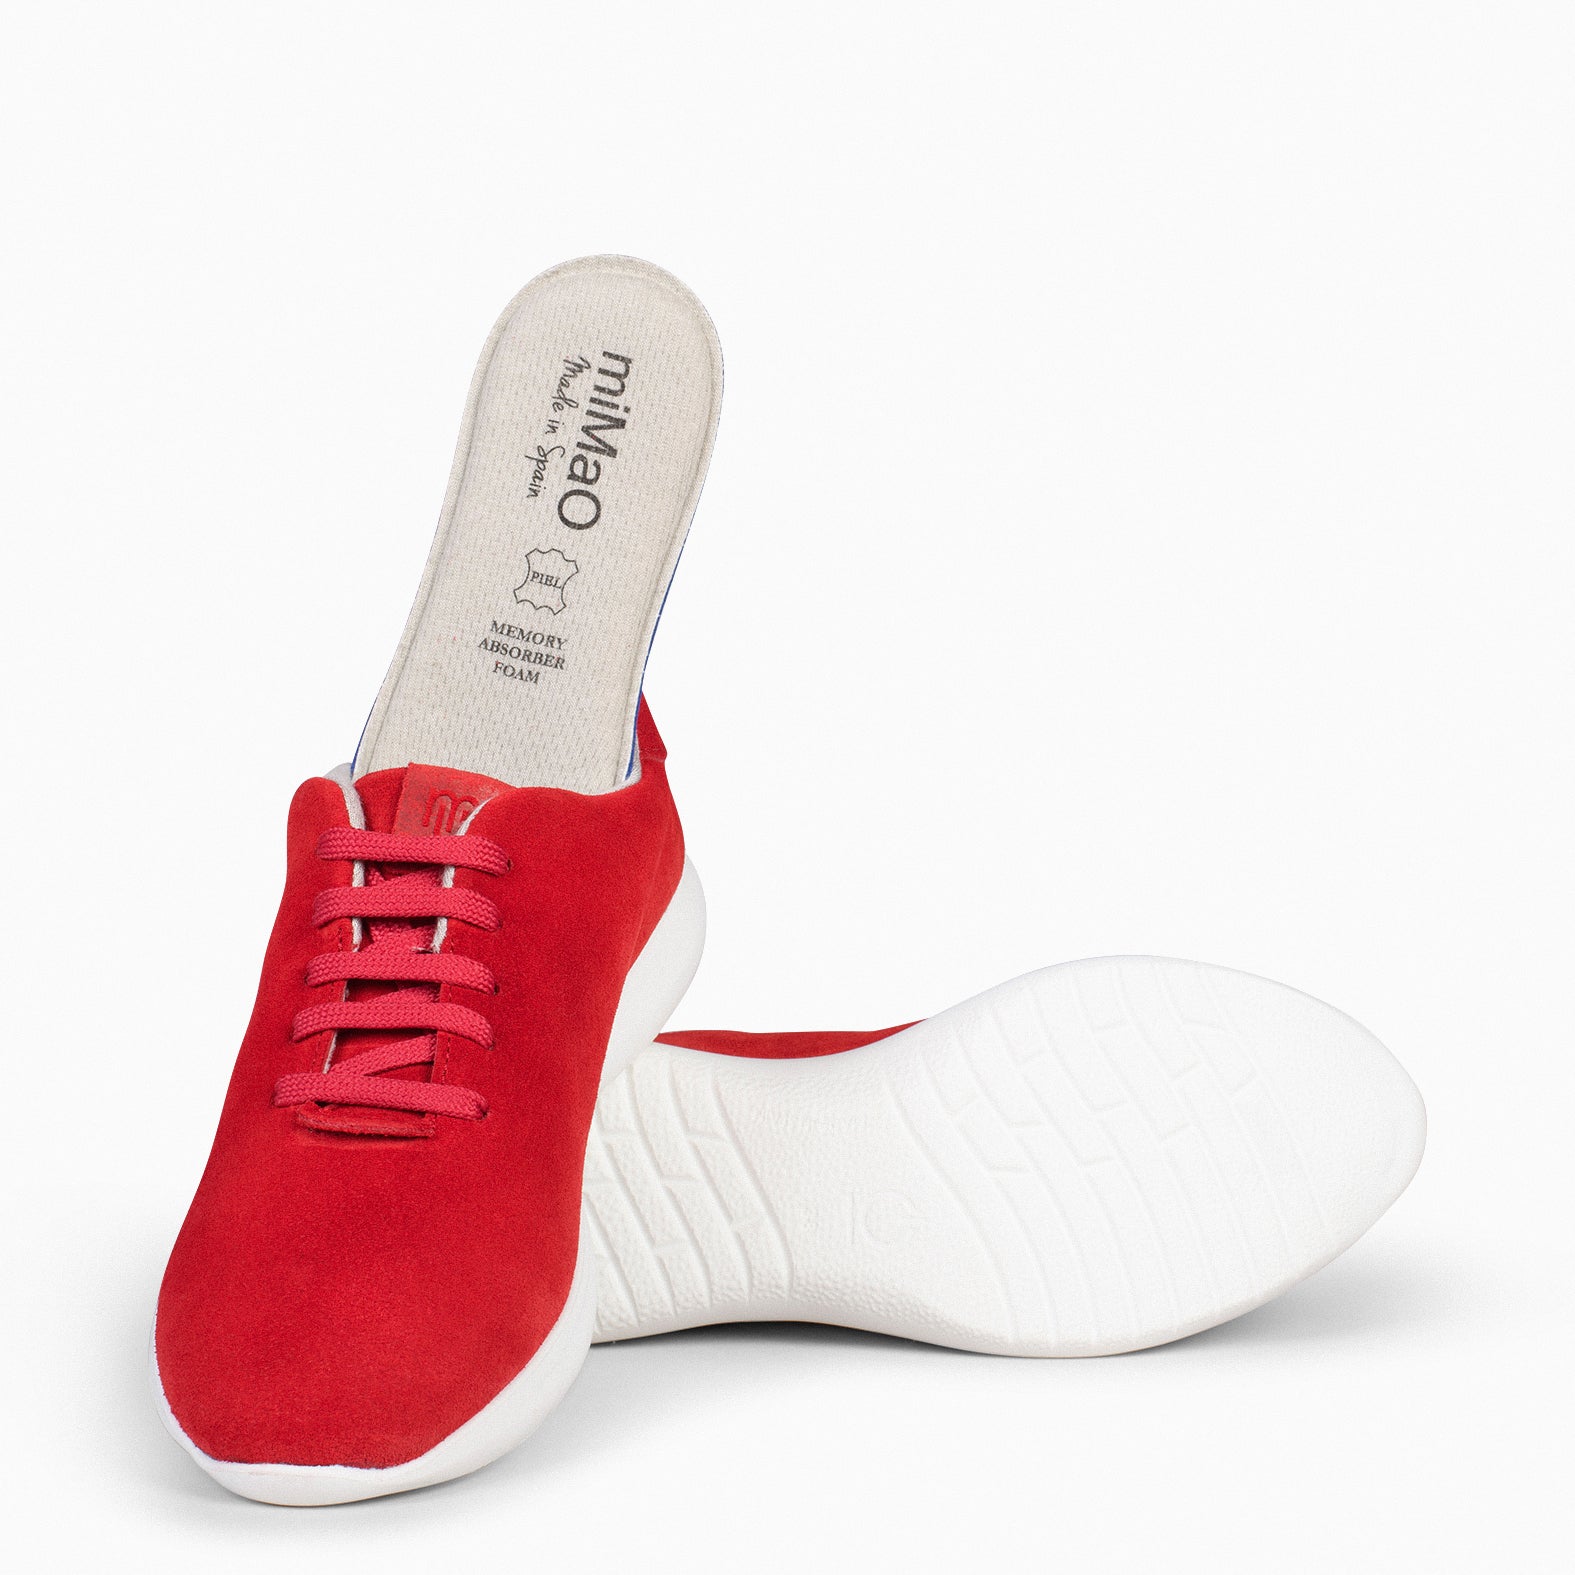 WALK – RED comfortable women sneakers